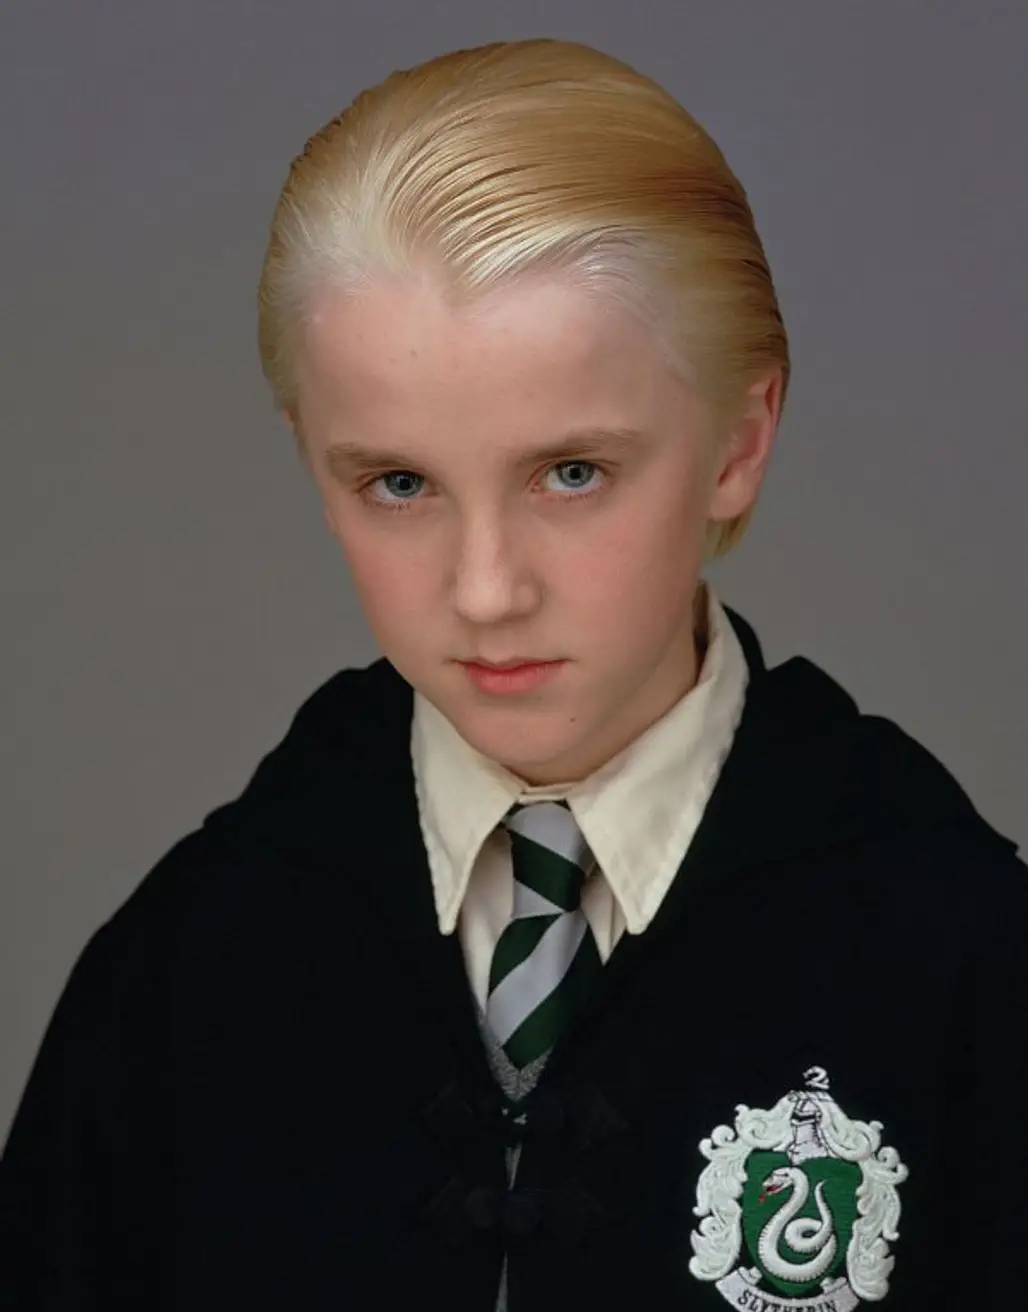 Draco Malfoy then